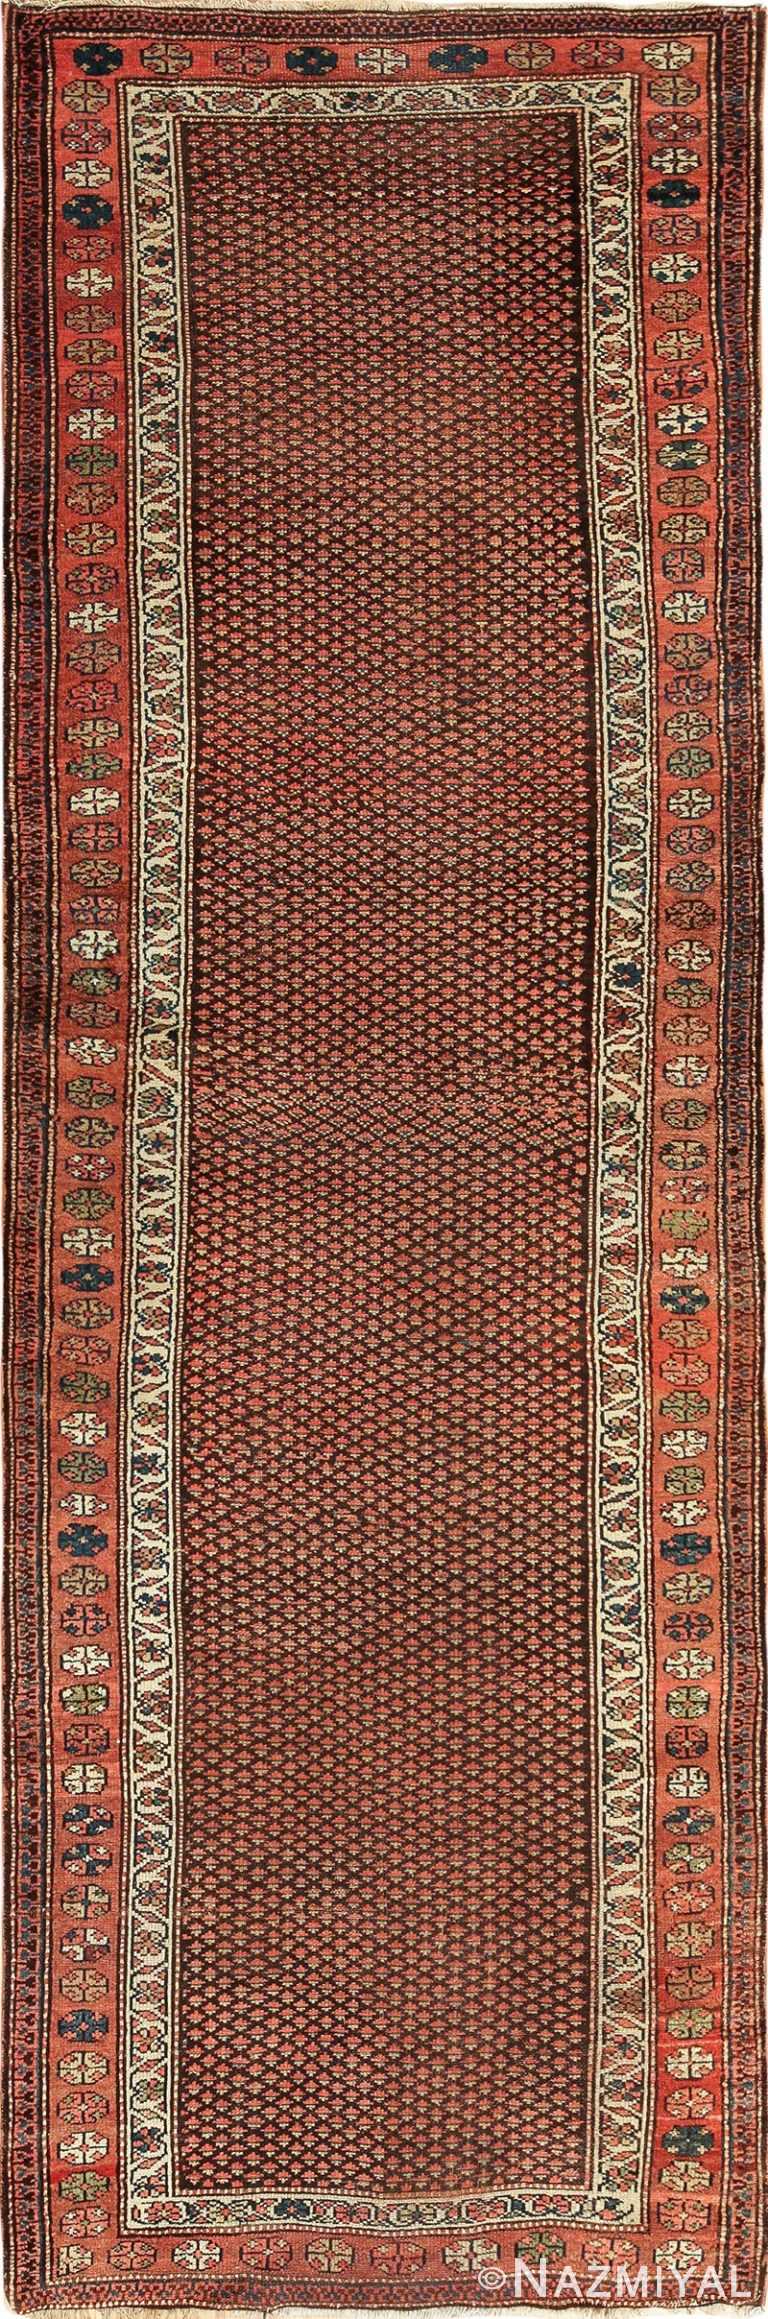 Antique Tribal Northwest Persian Runner Rug 49711 by Nazmiyal